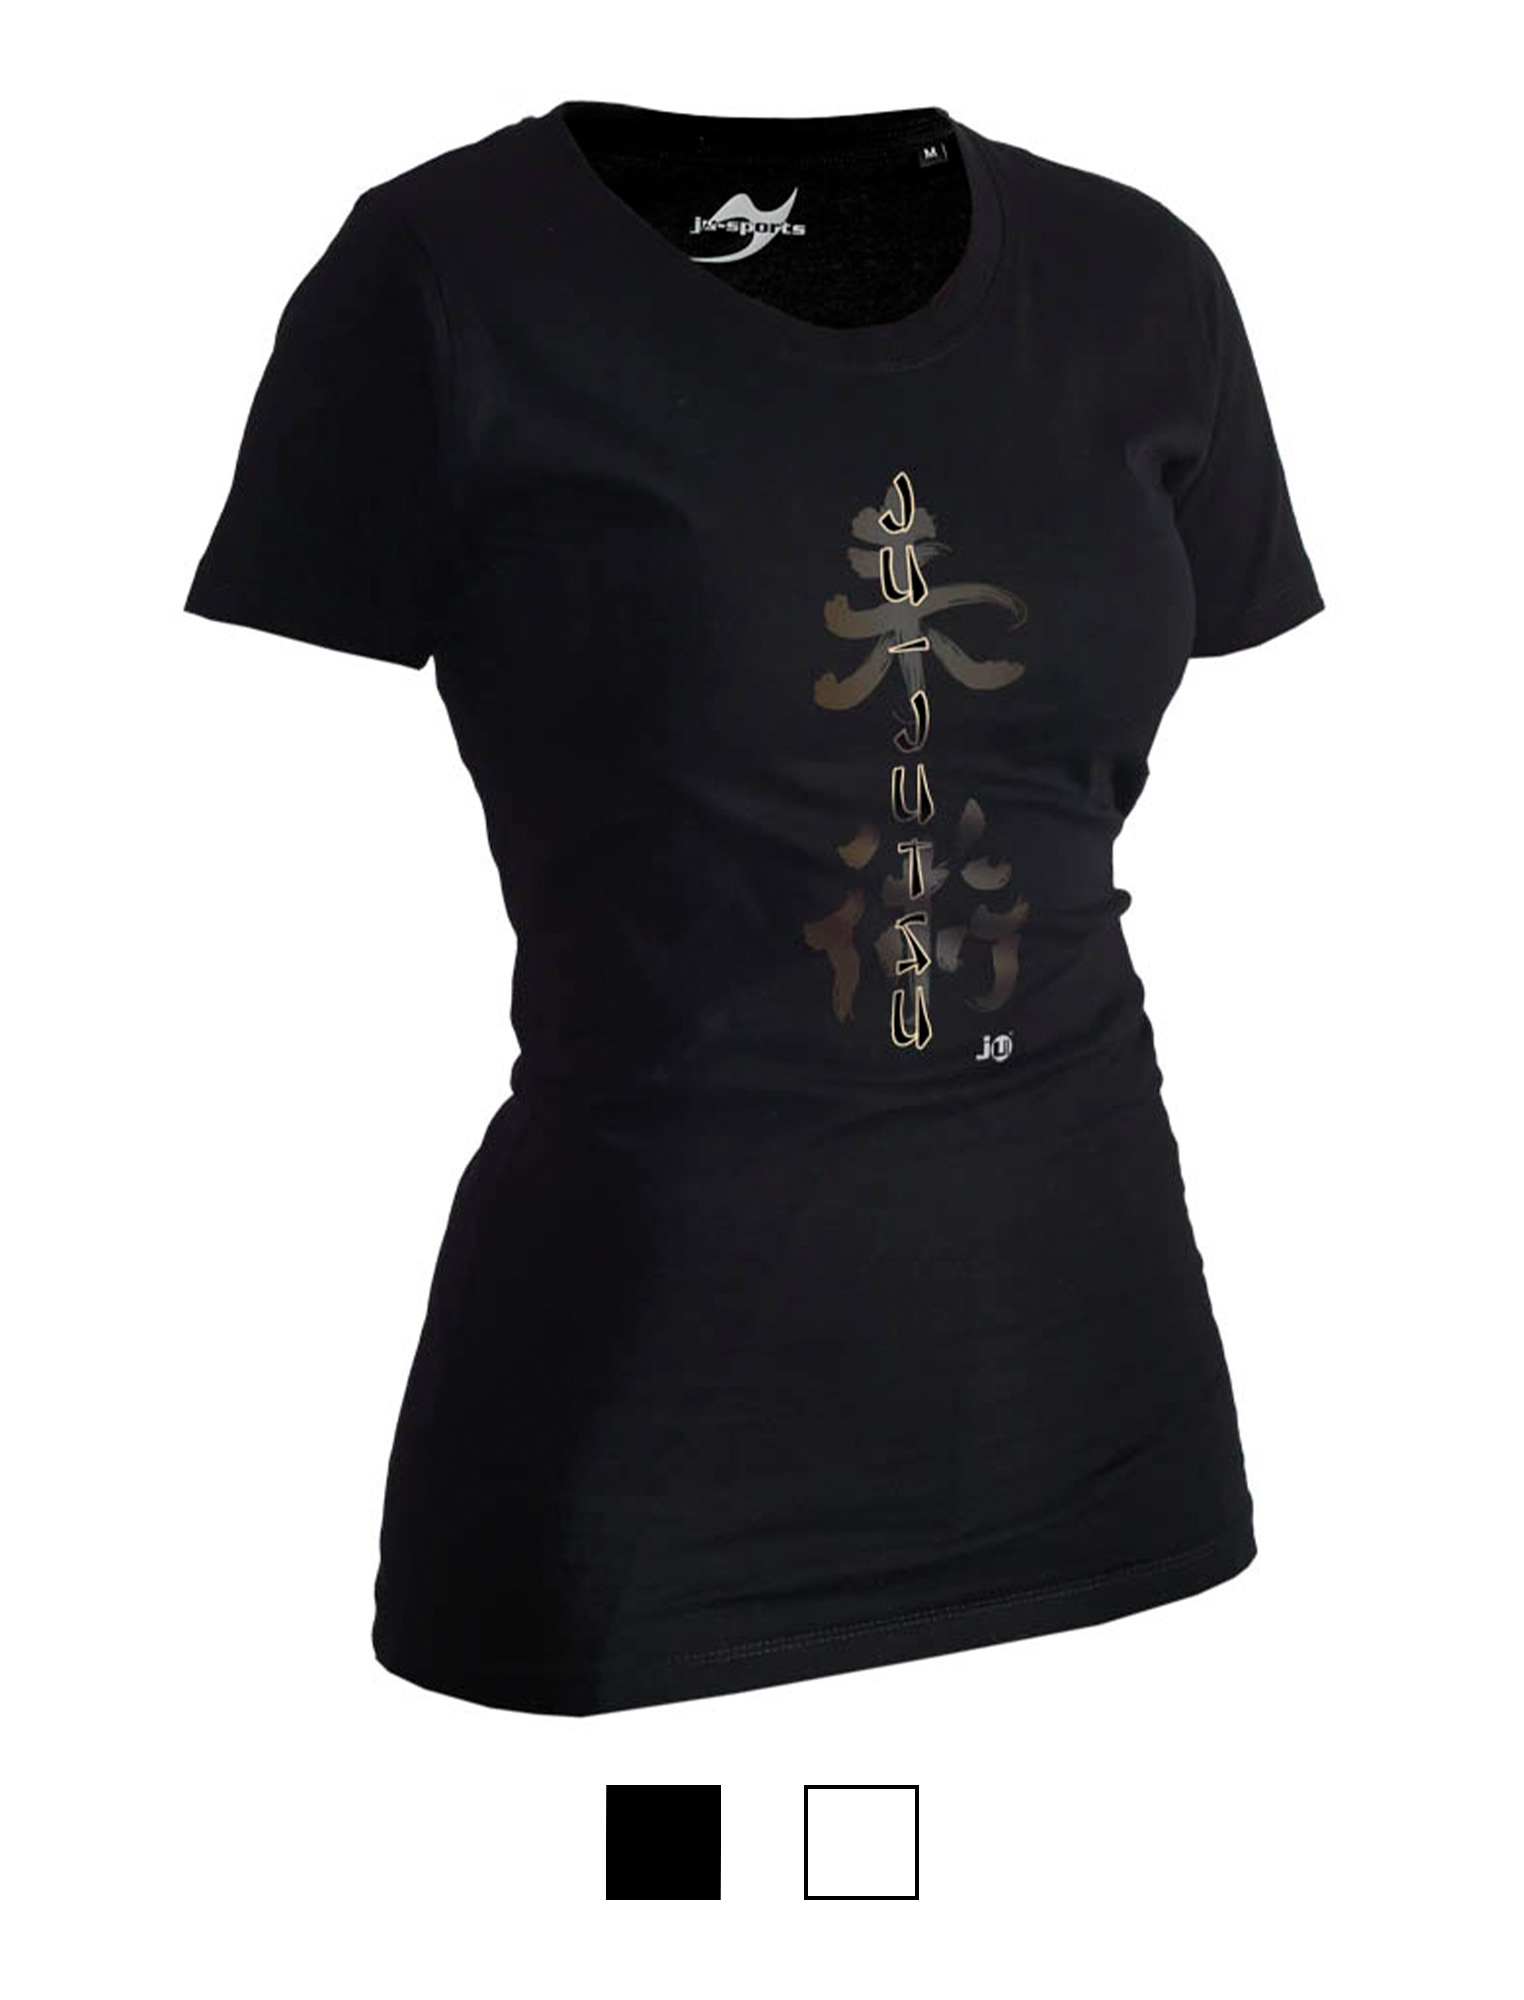 Ju-Jutsu-Shirt Classic schwarz Lady